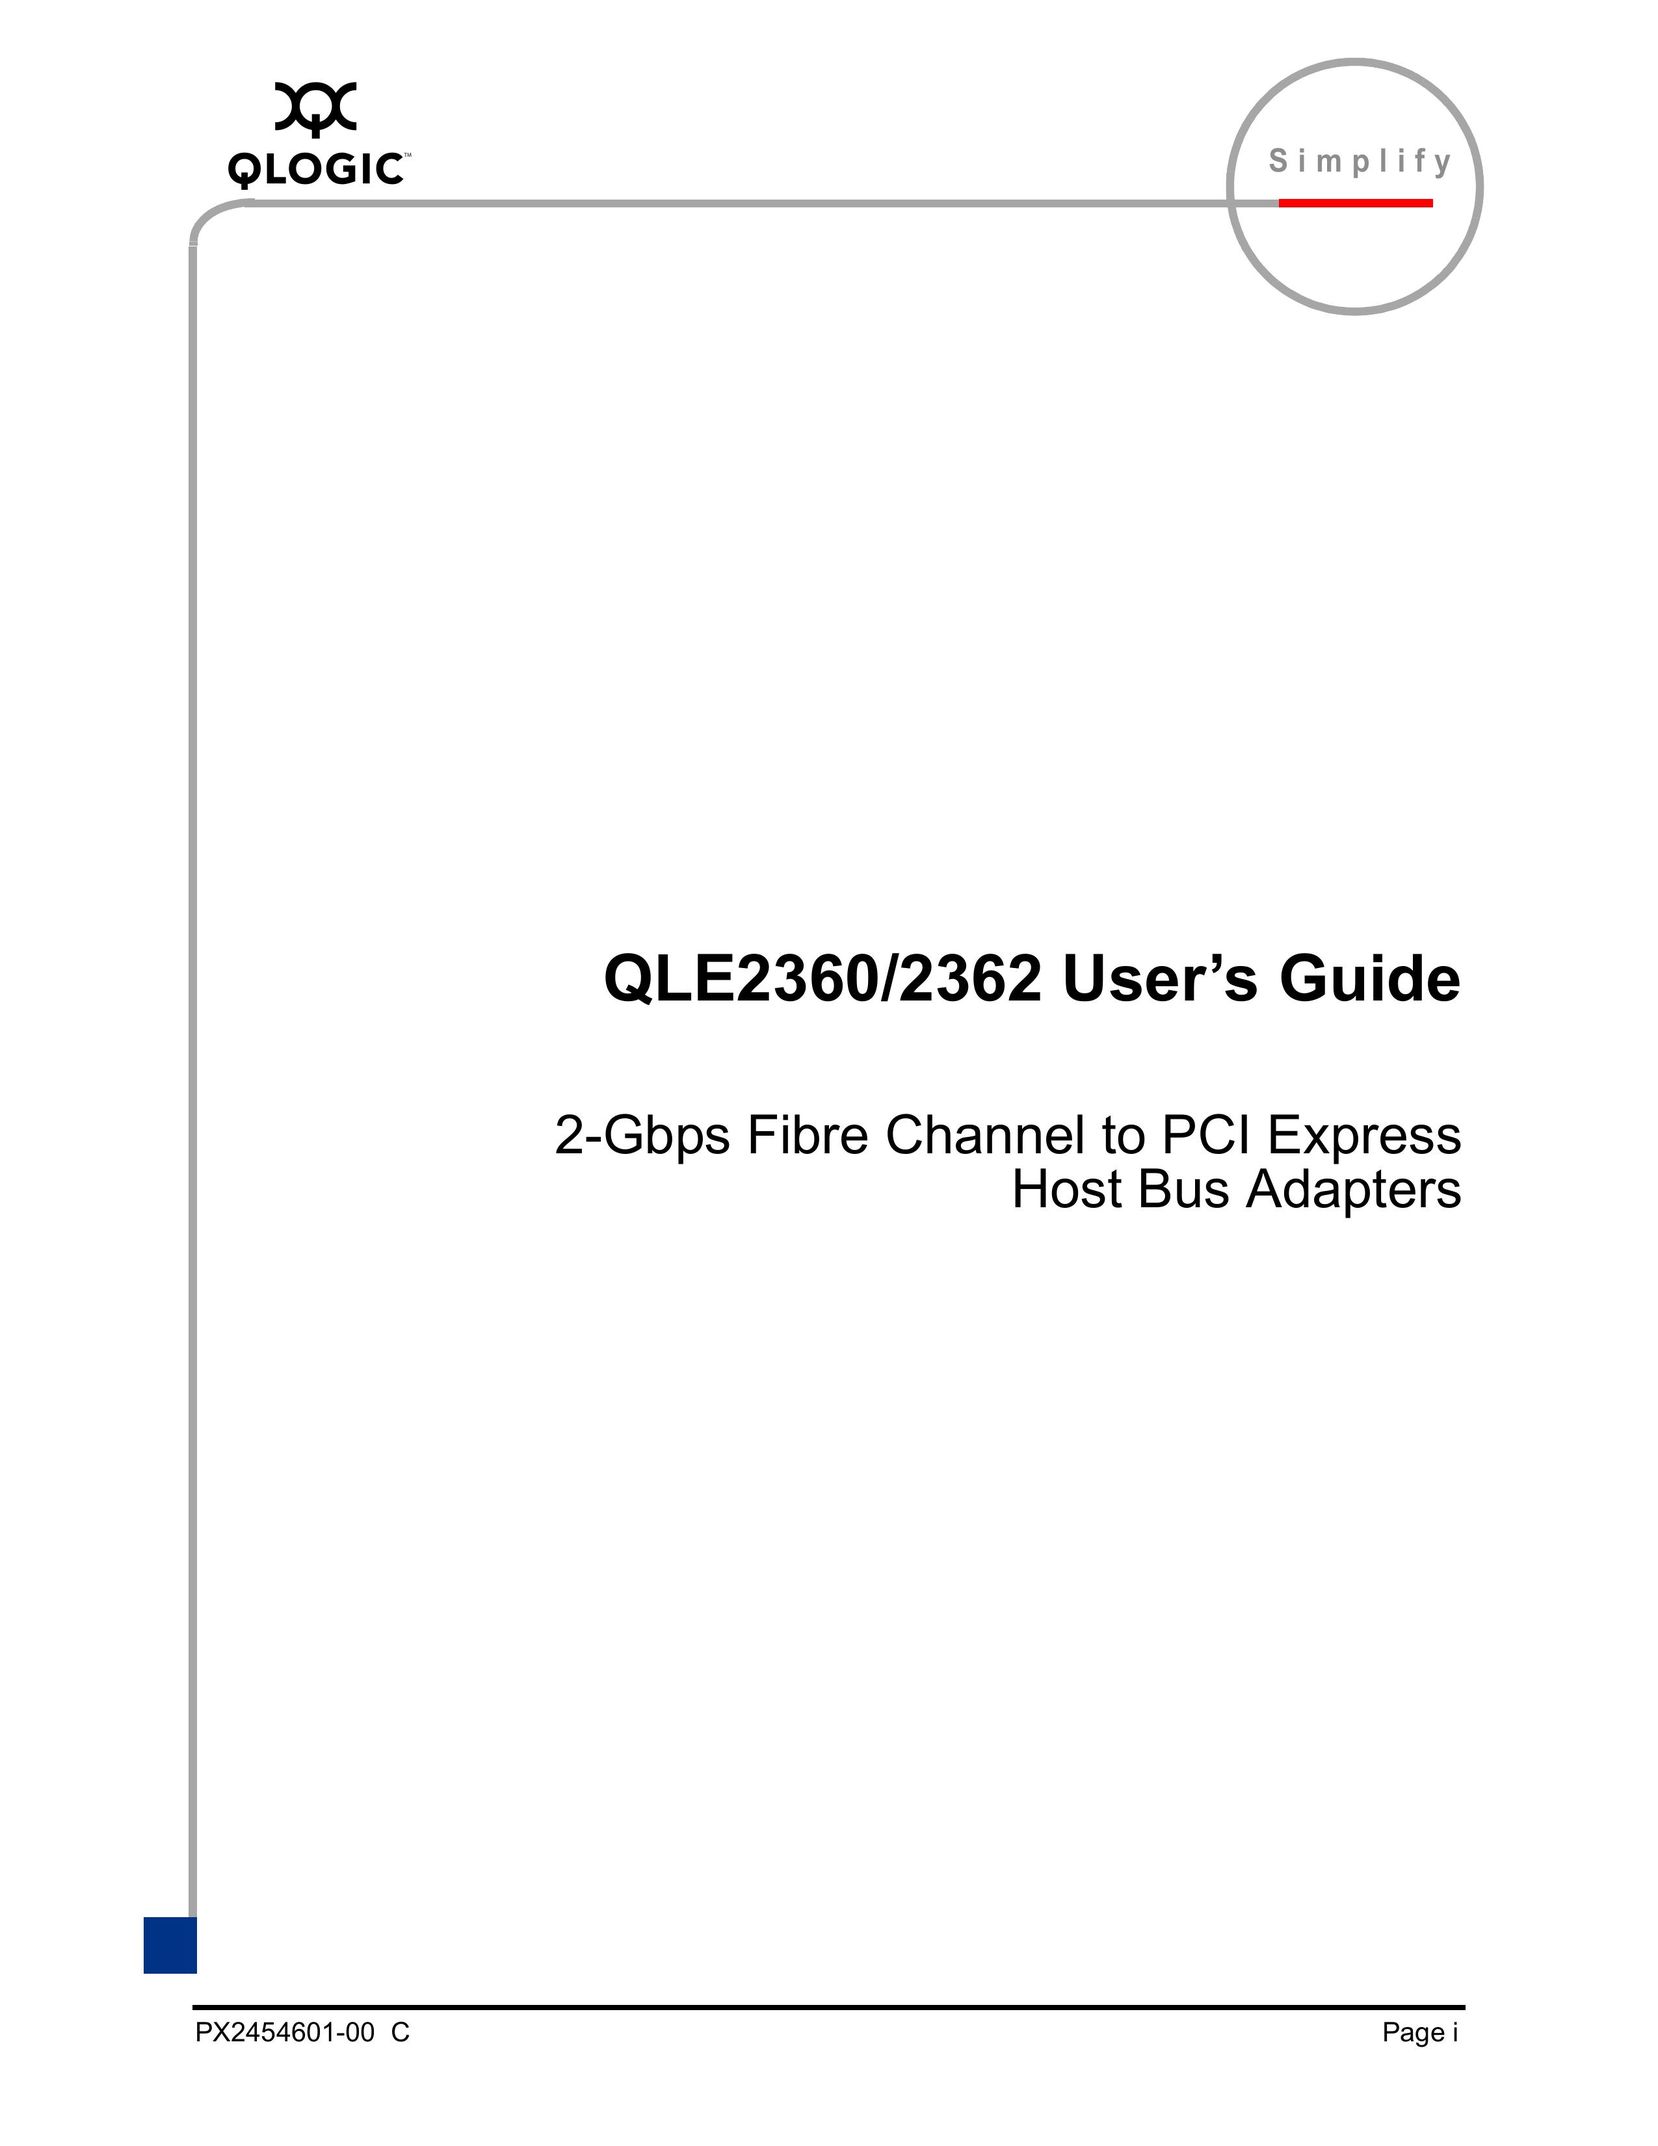 Q-Logic QLE2360 Computer Hardware User Manual